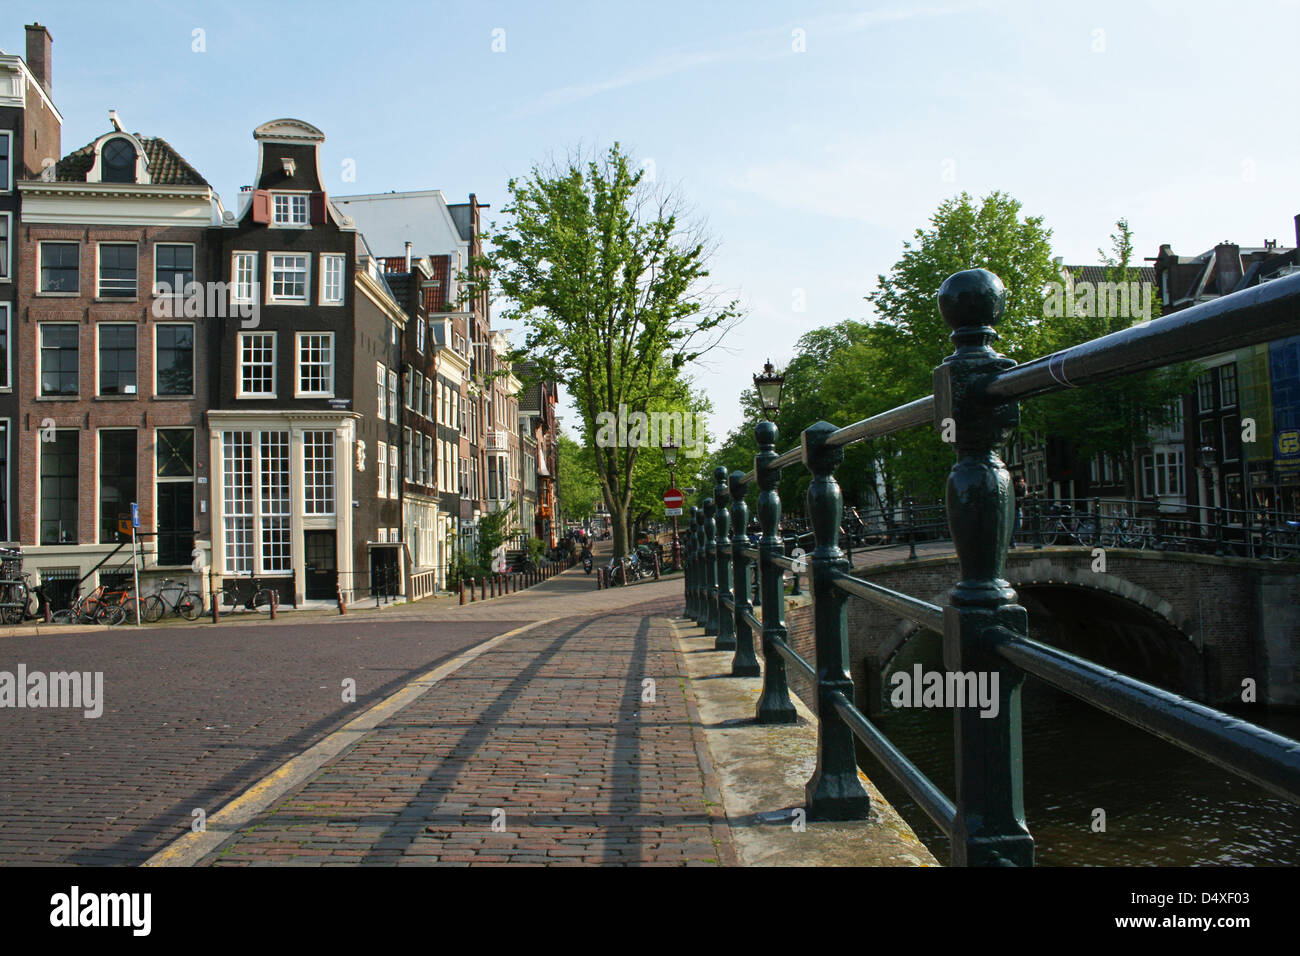 The Netherlands Holland Amsterdam Canal District Keizersgracht 716 Reguliersgracht clock gable 1671 Stock Photo